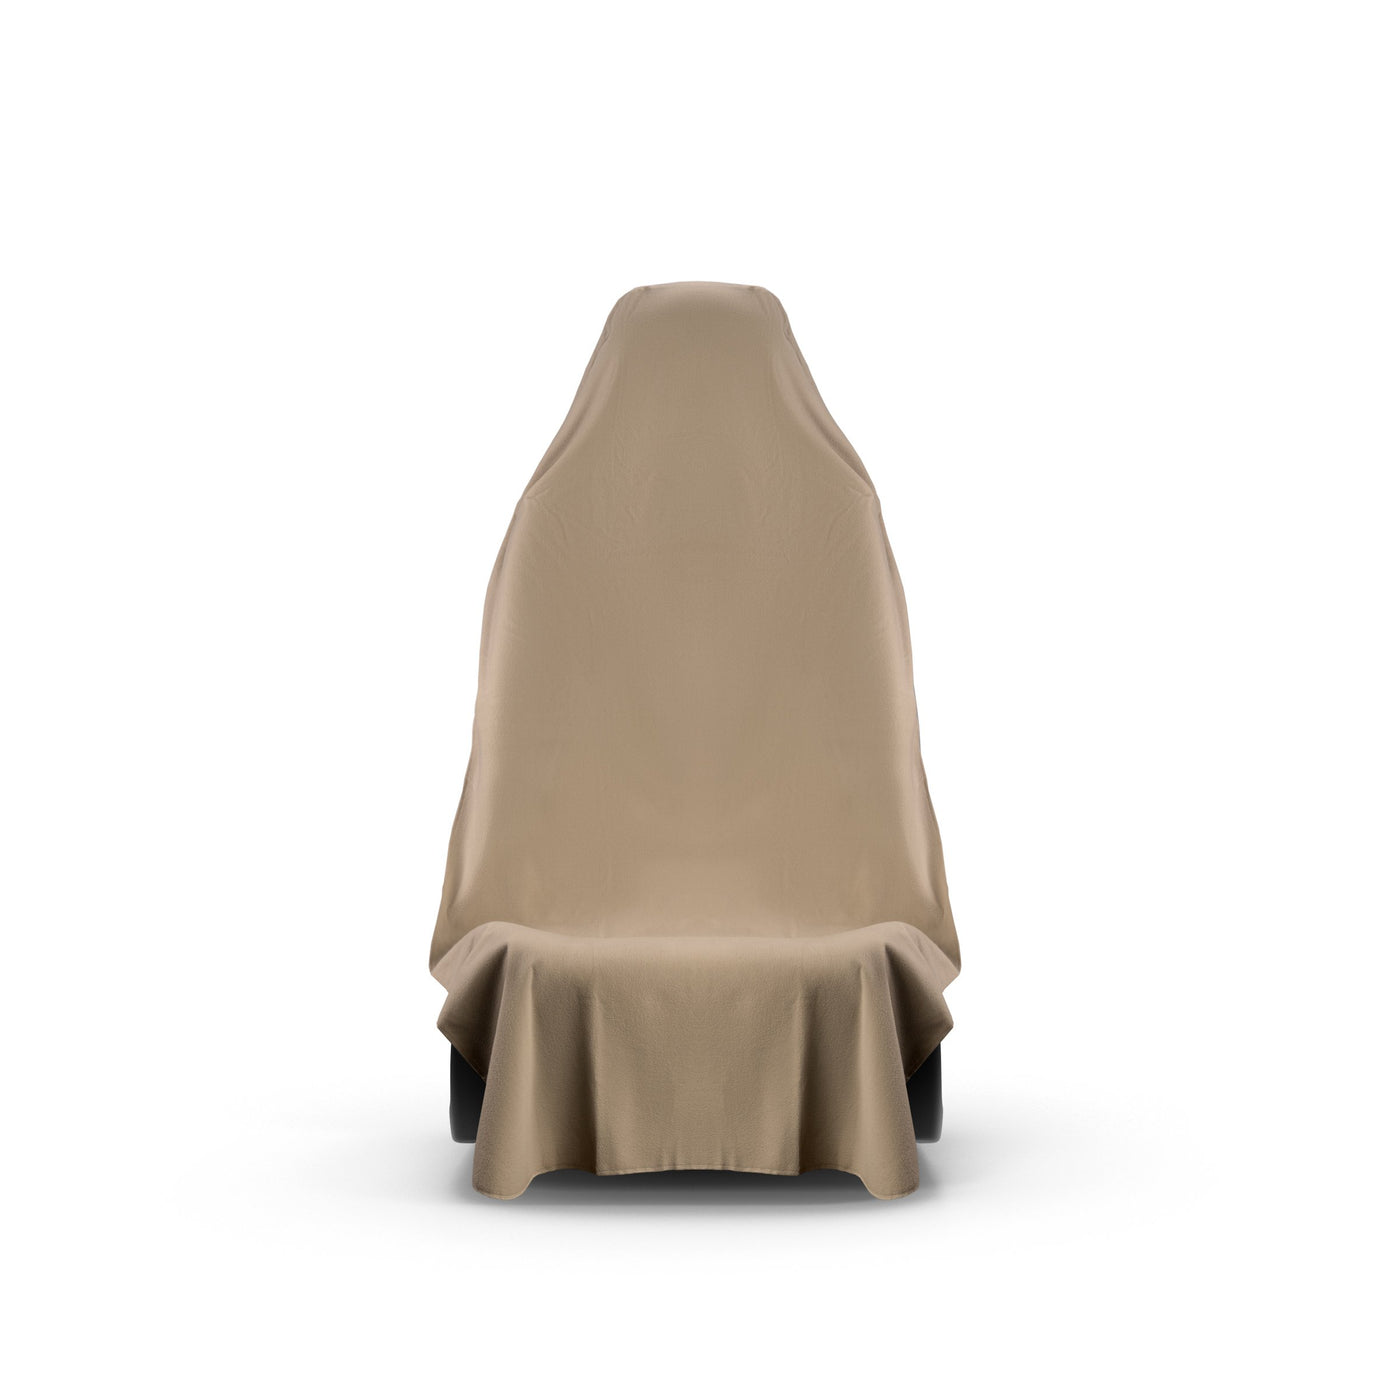 Ultrasport Seatshield - Waterproof car seat protector - Front- Tan